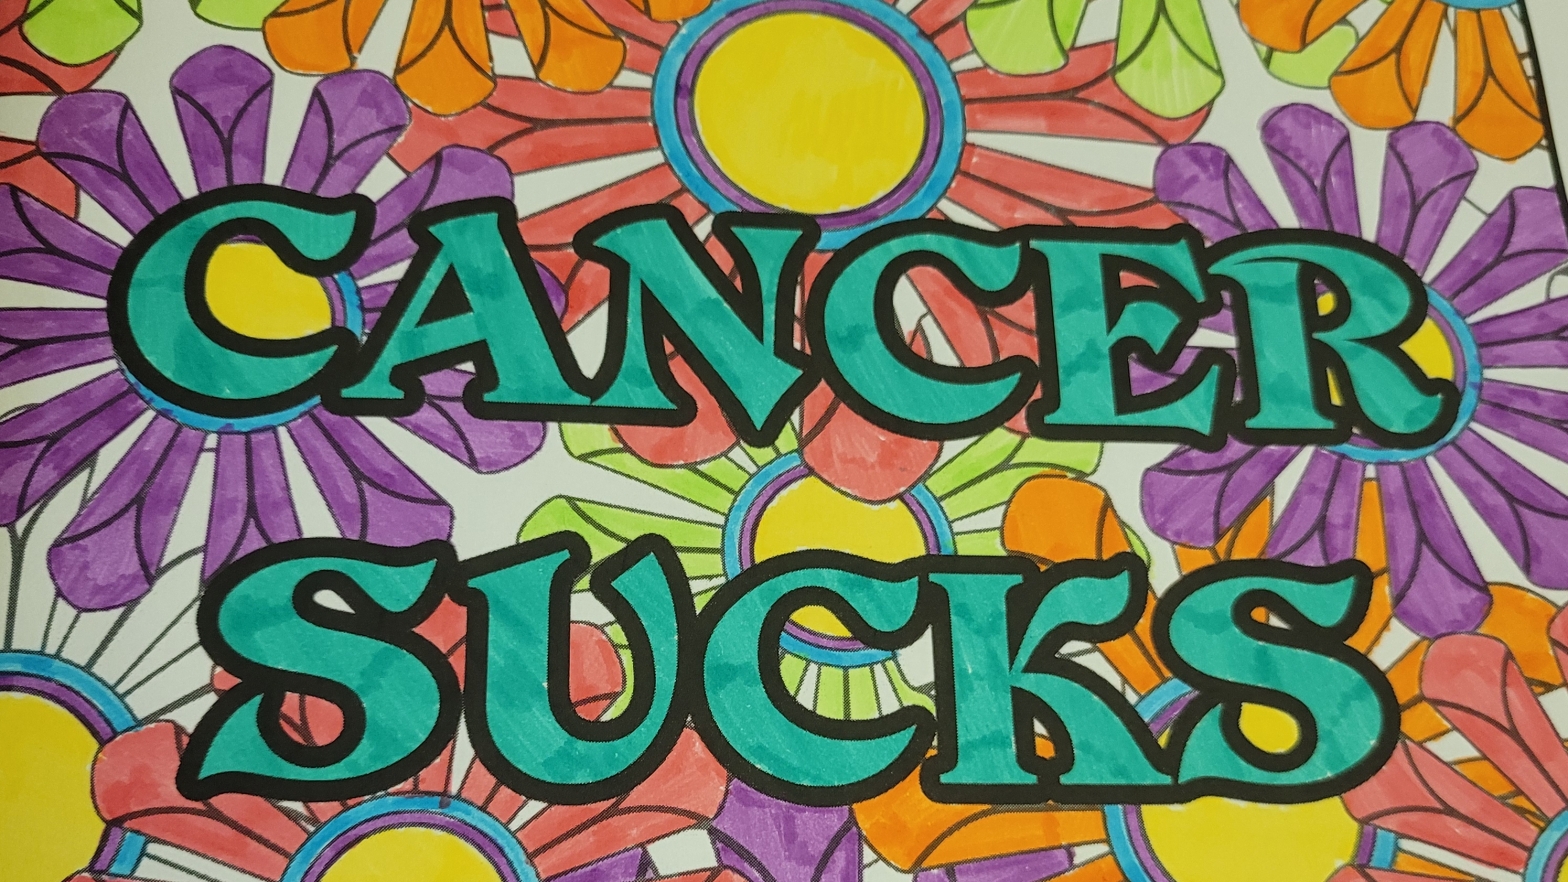 “Cancer Sucks” scene from adult colouring book, by Alastair Lichten